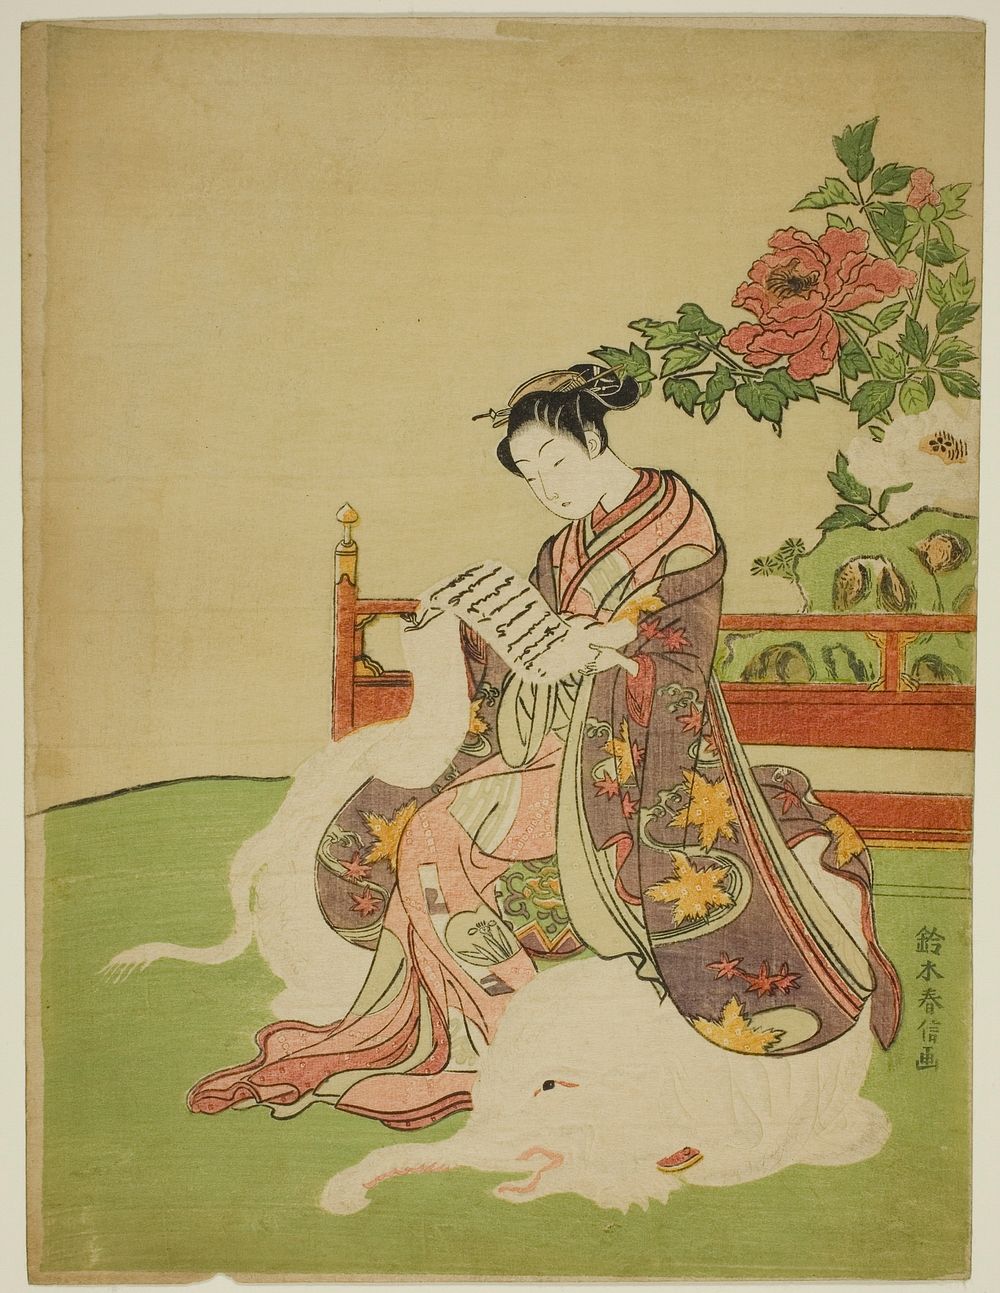 Young Woman Seated on a White Elephant (parody of the Bodhisattva Fugen) by Suzuki Harunobu